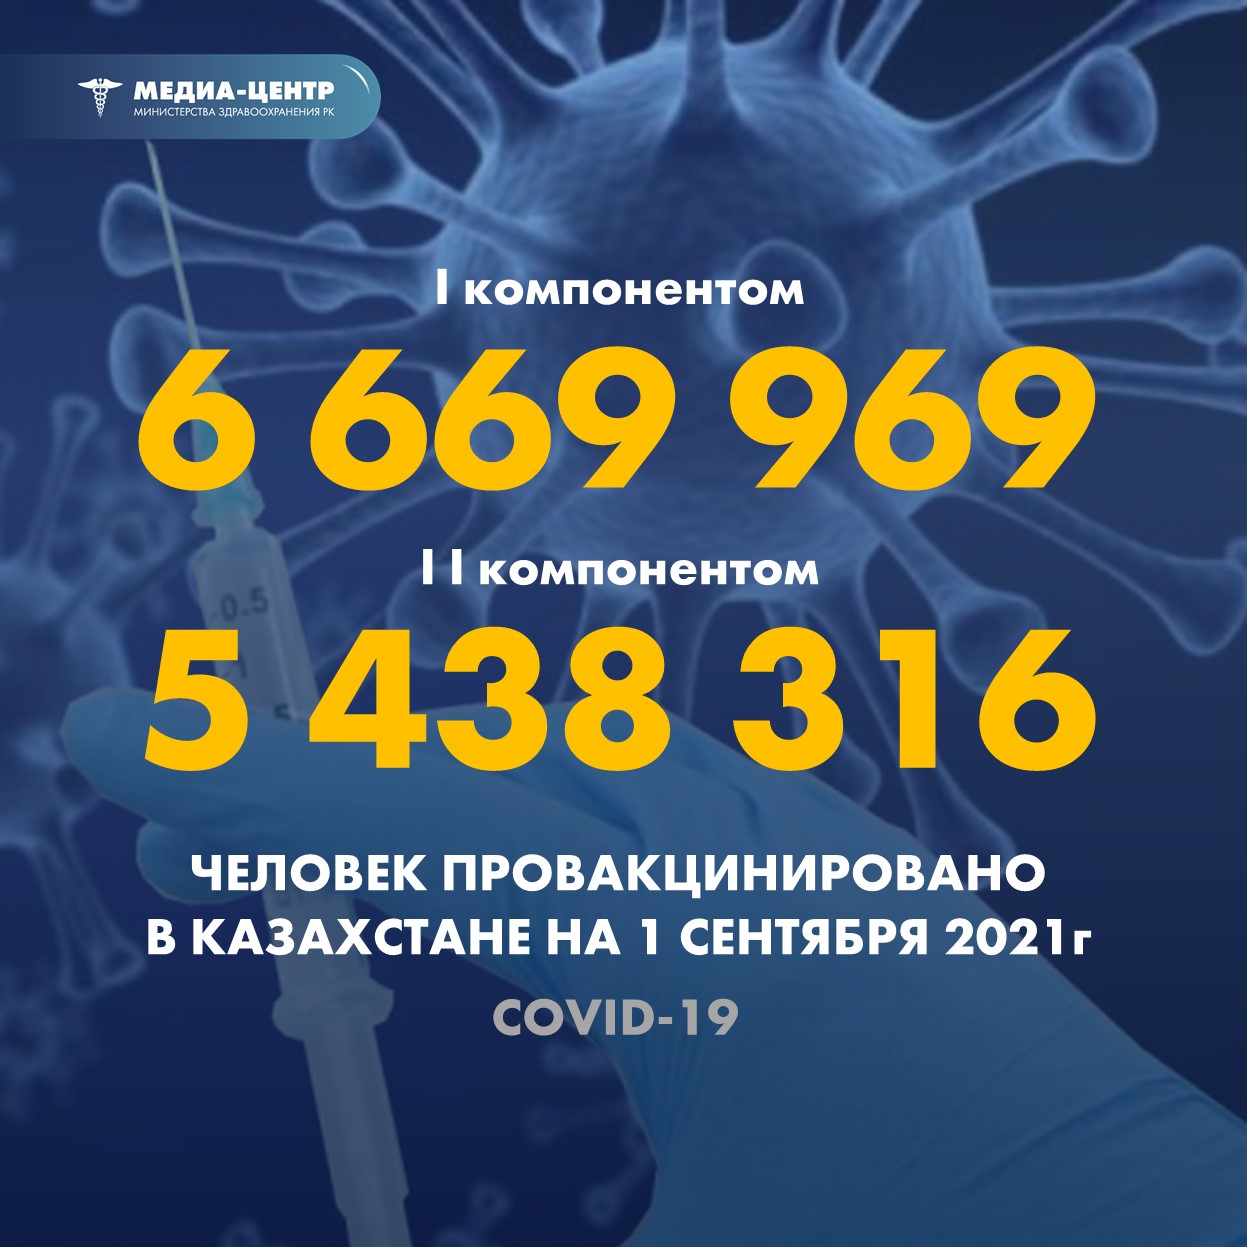 I компонентом 6 669 969 человек провакцинировано в Казахстане на 1 сентября 2021 г, II компонентом 5 438 316 человек.